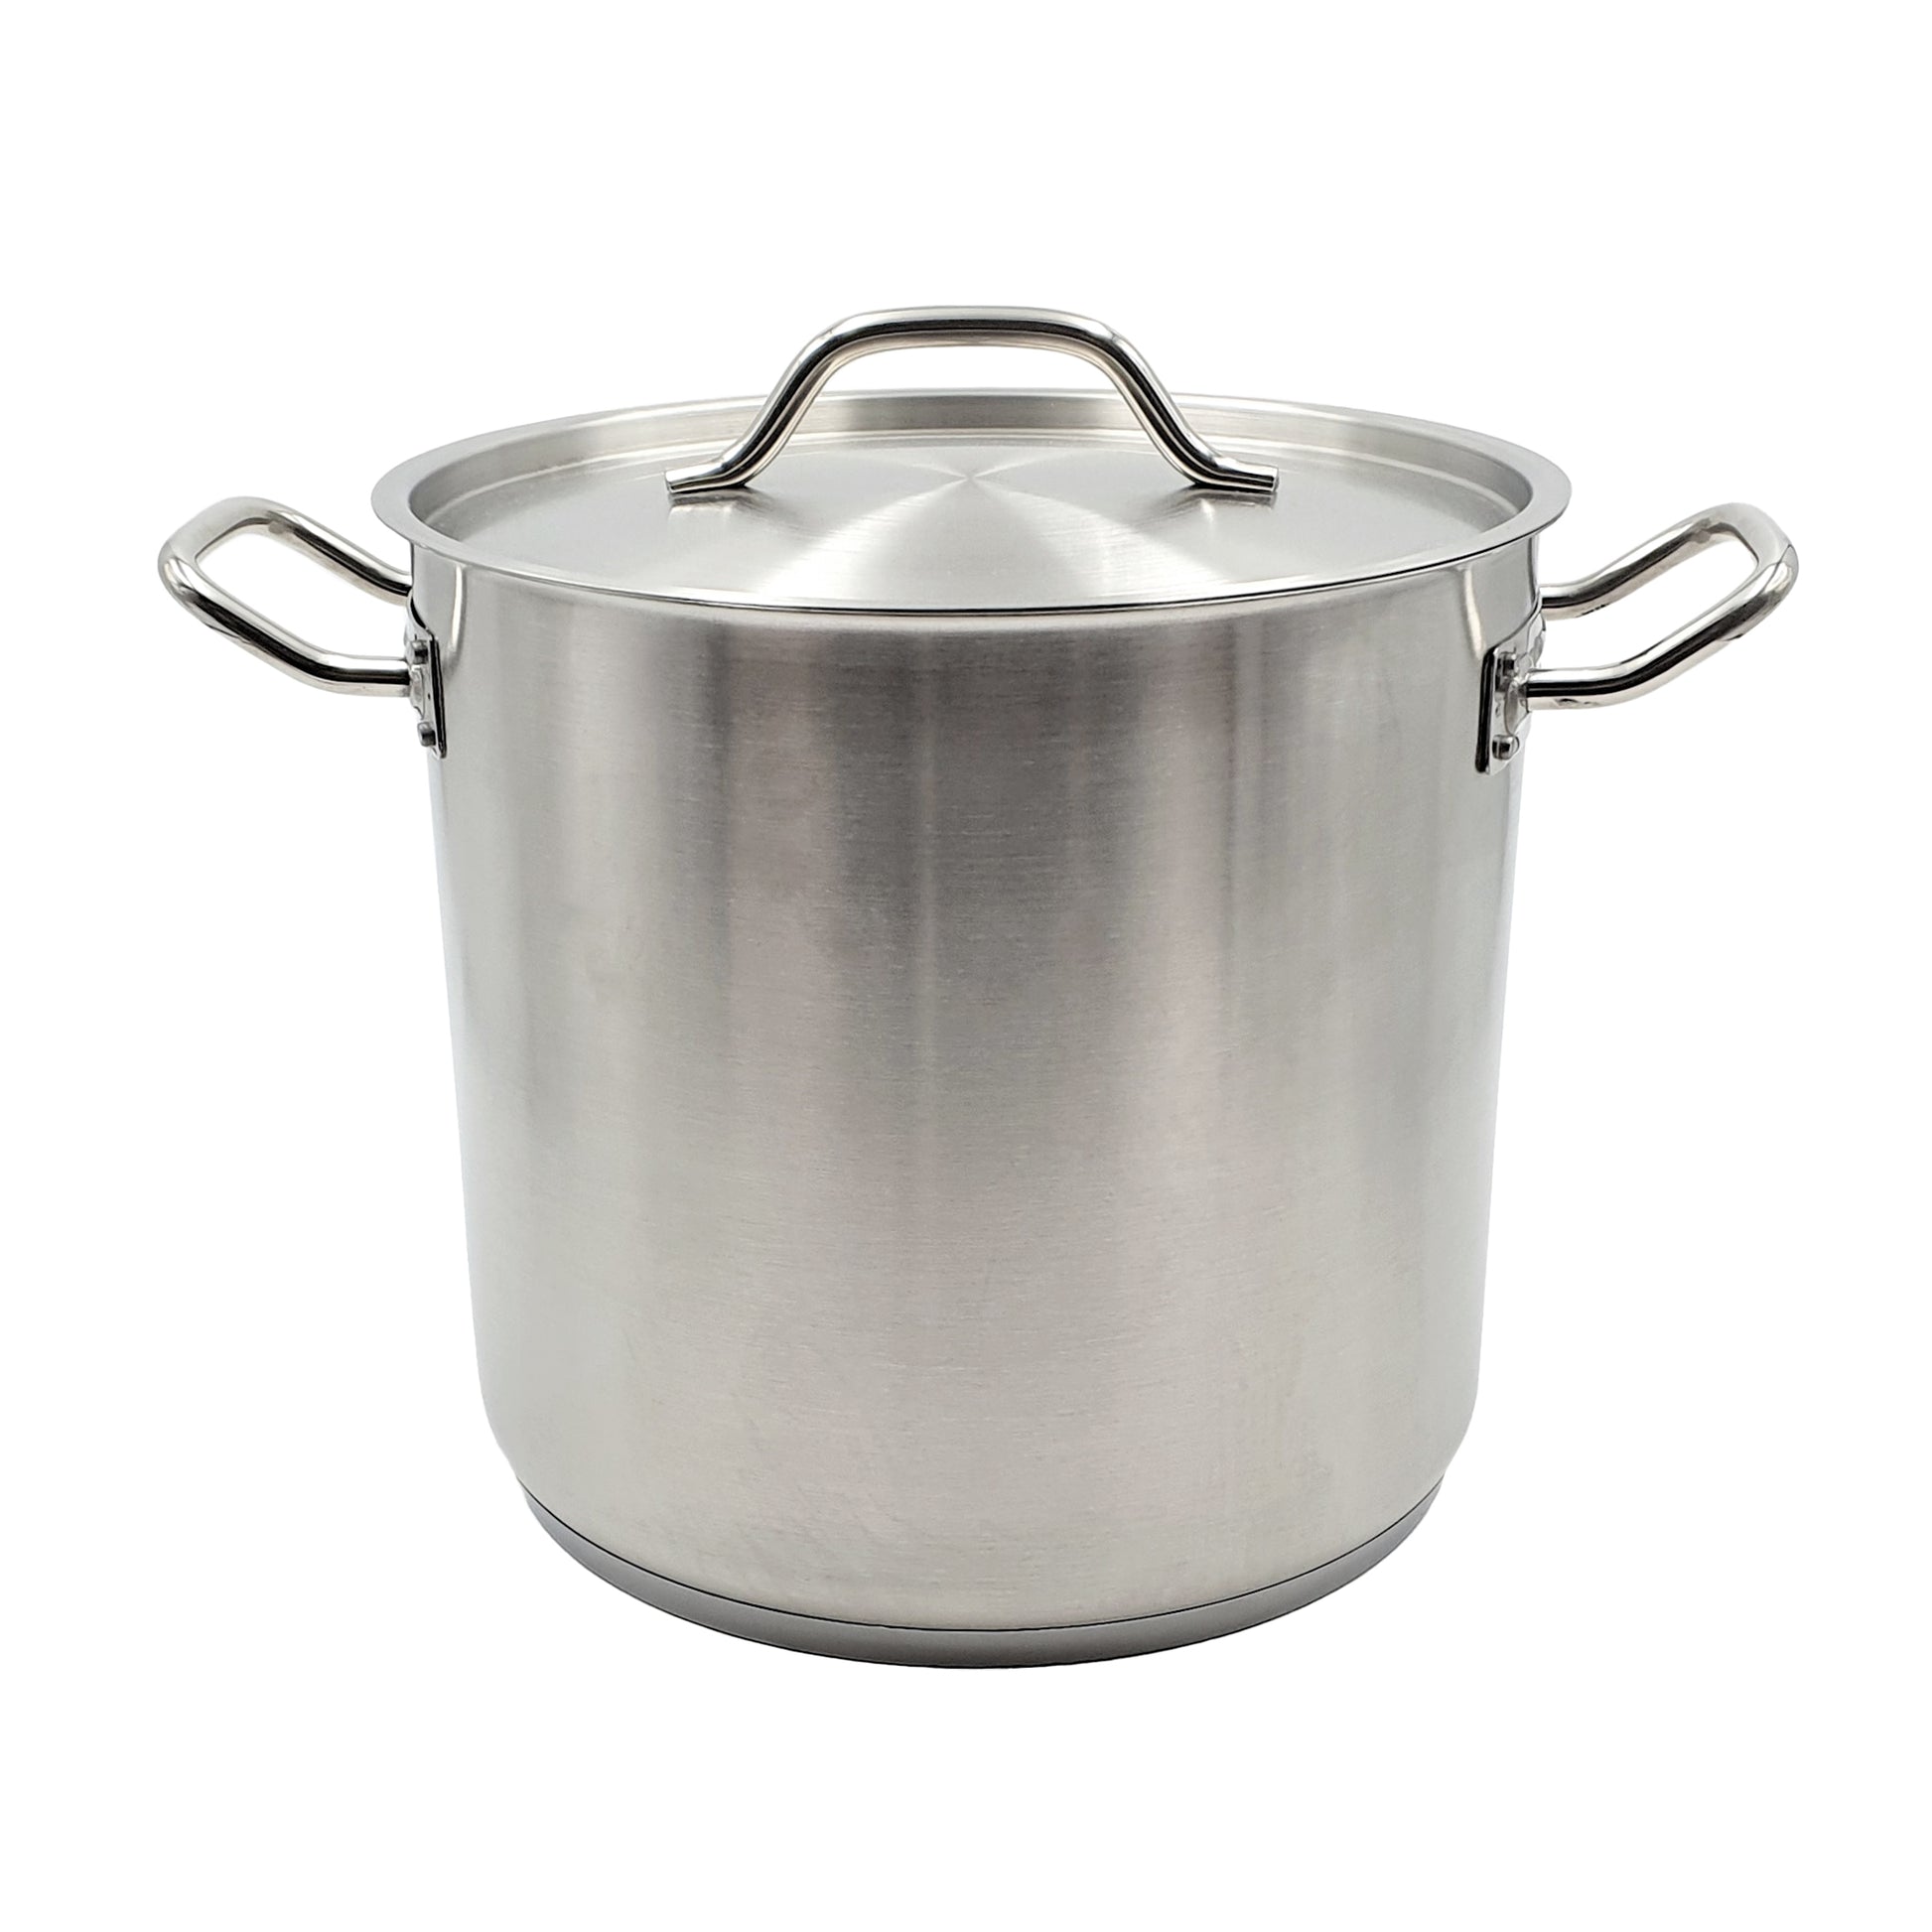 Italian Made 140 litre aluminium stock pot with lid used for making tomato passata sauce.